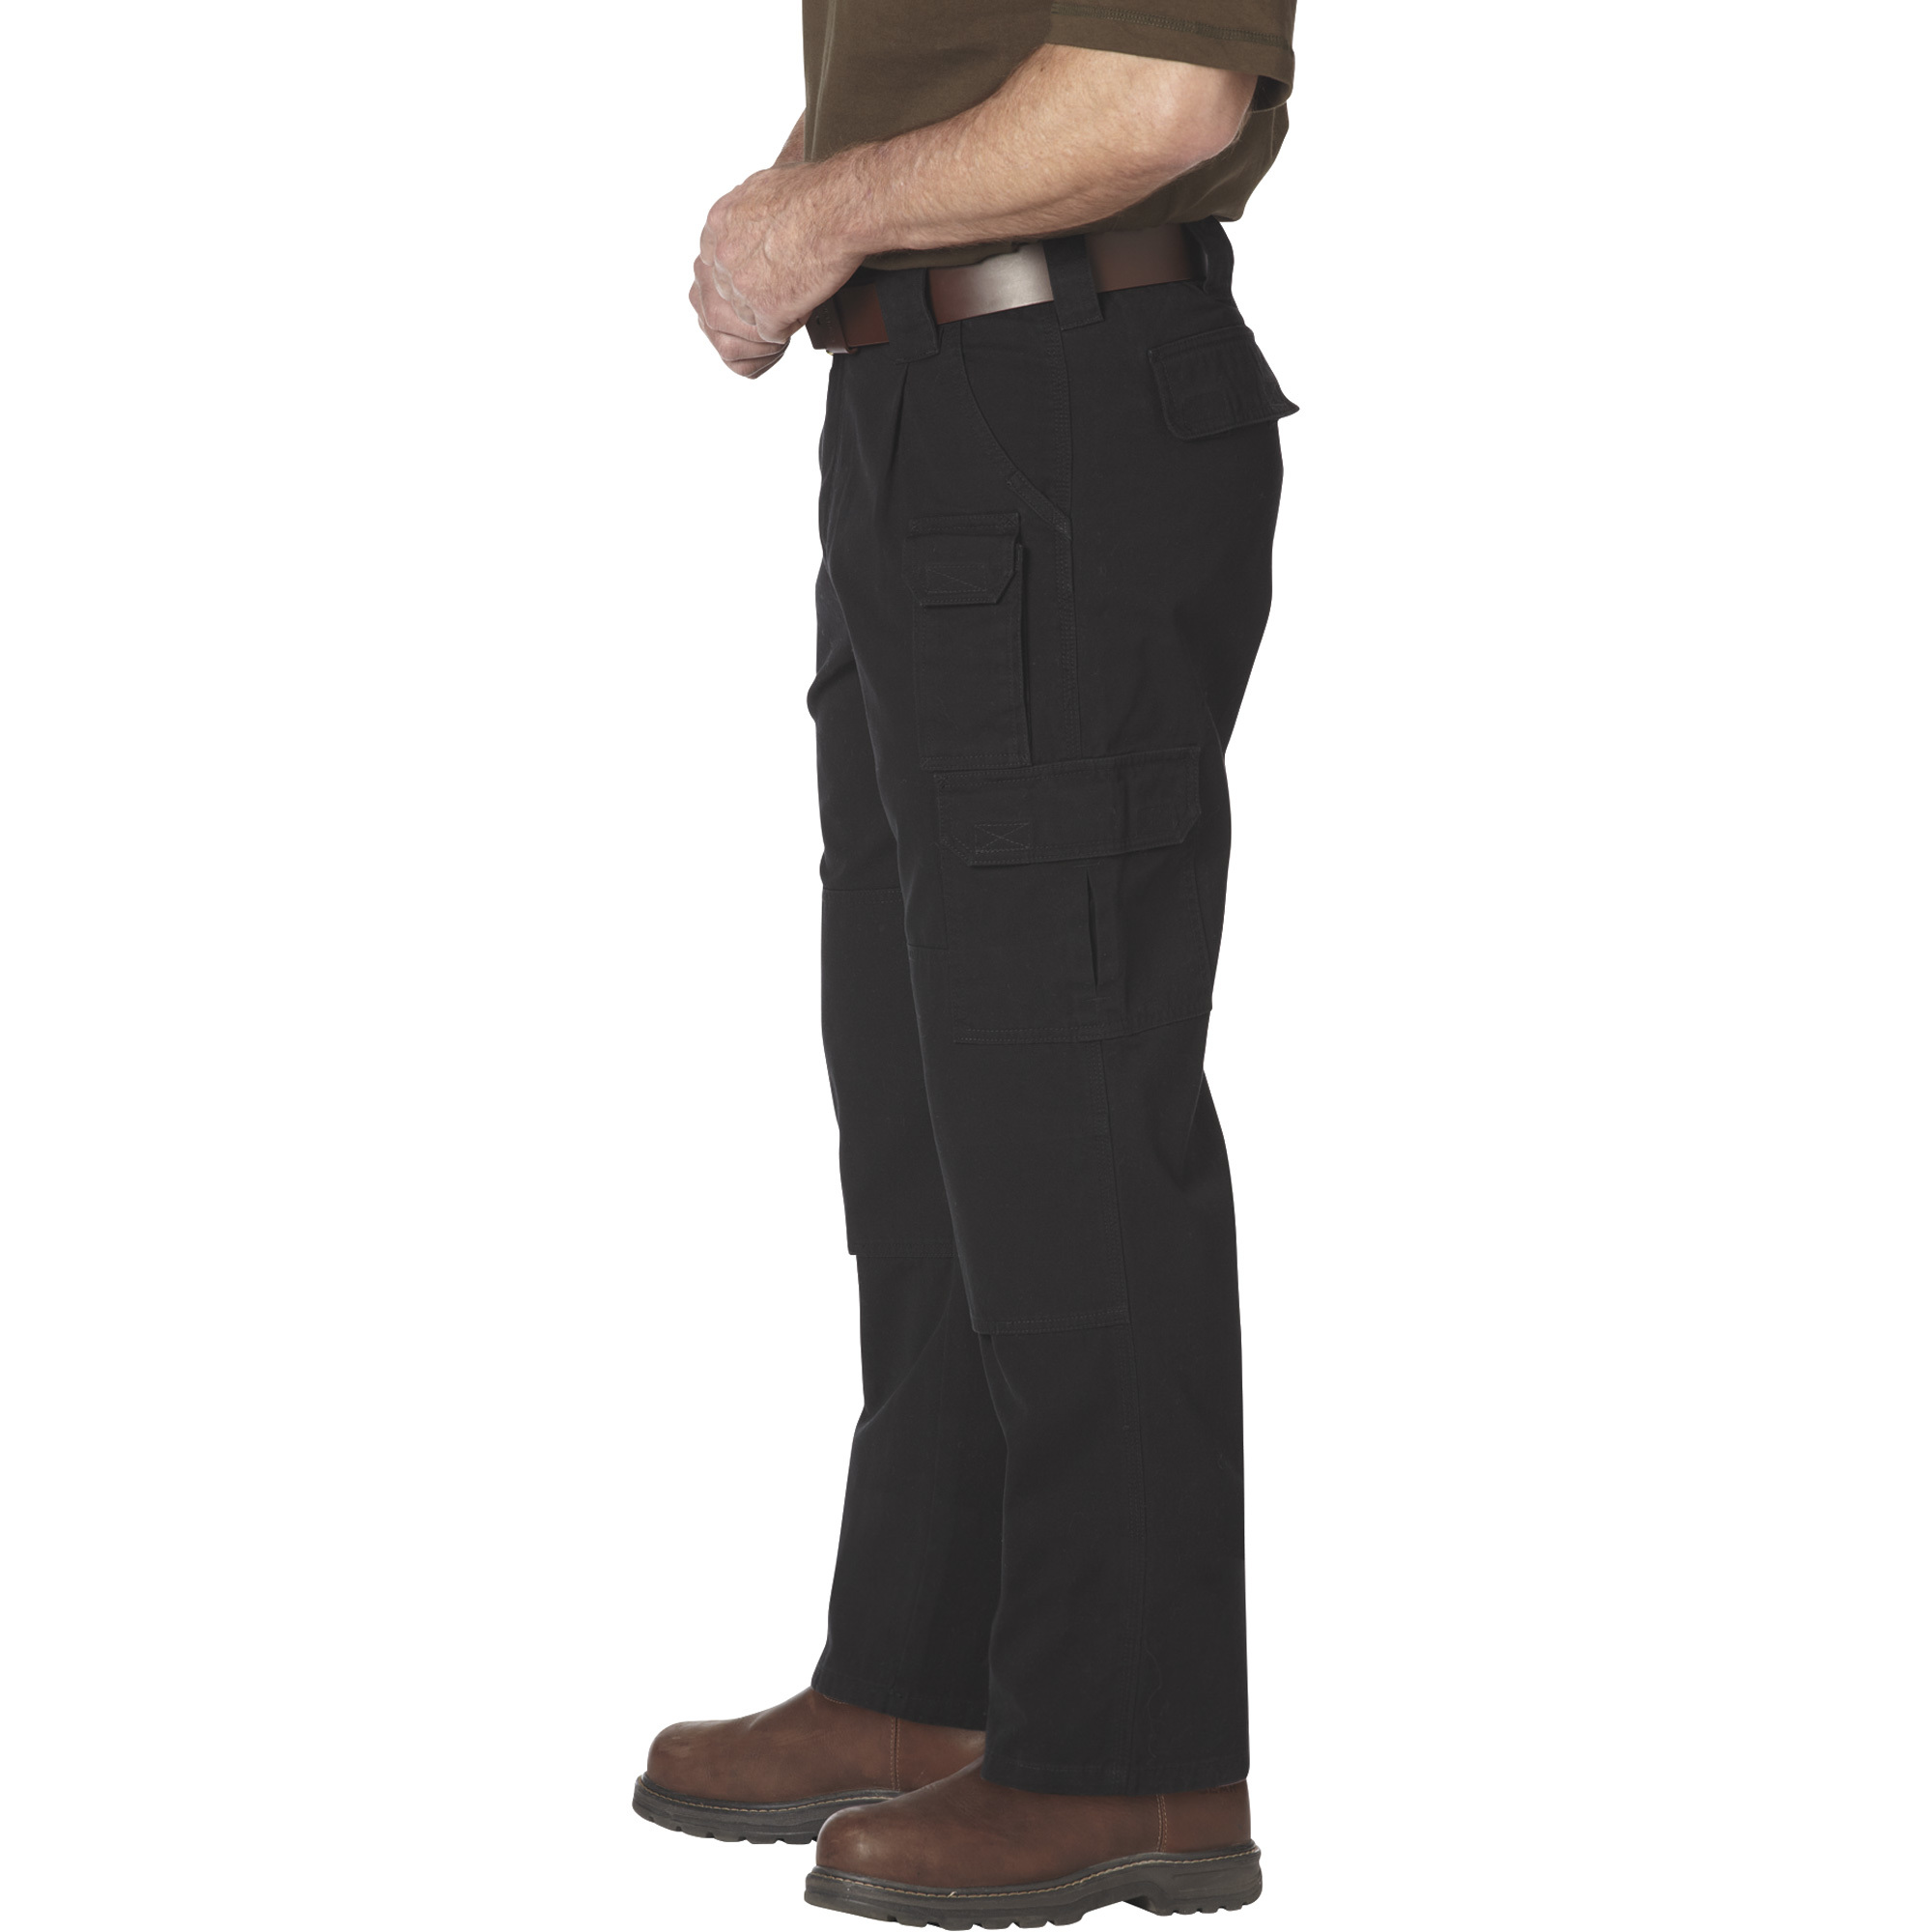 Gravel Gear Men's 7-Pocket Tactical Pants with Teflon - Black, 38Inch Waist x 34Inch Inseam